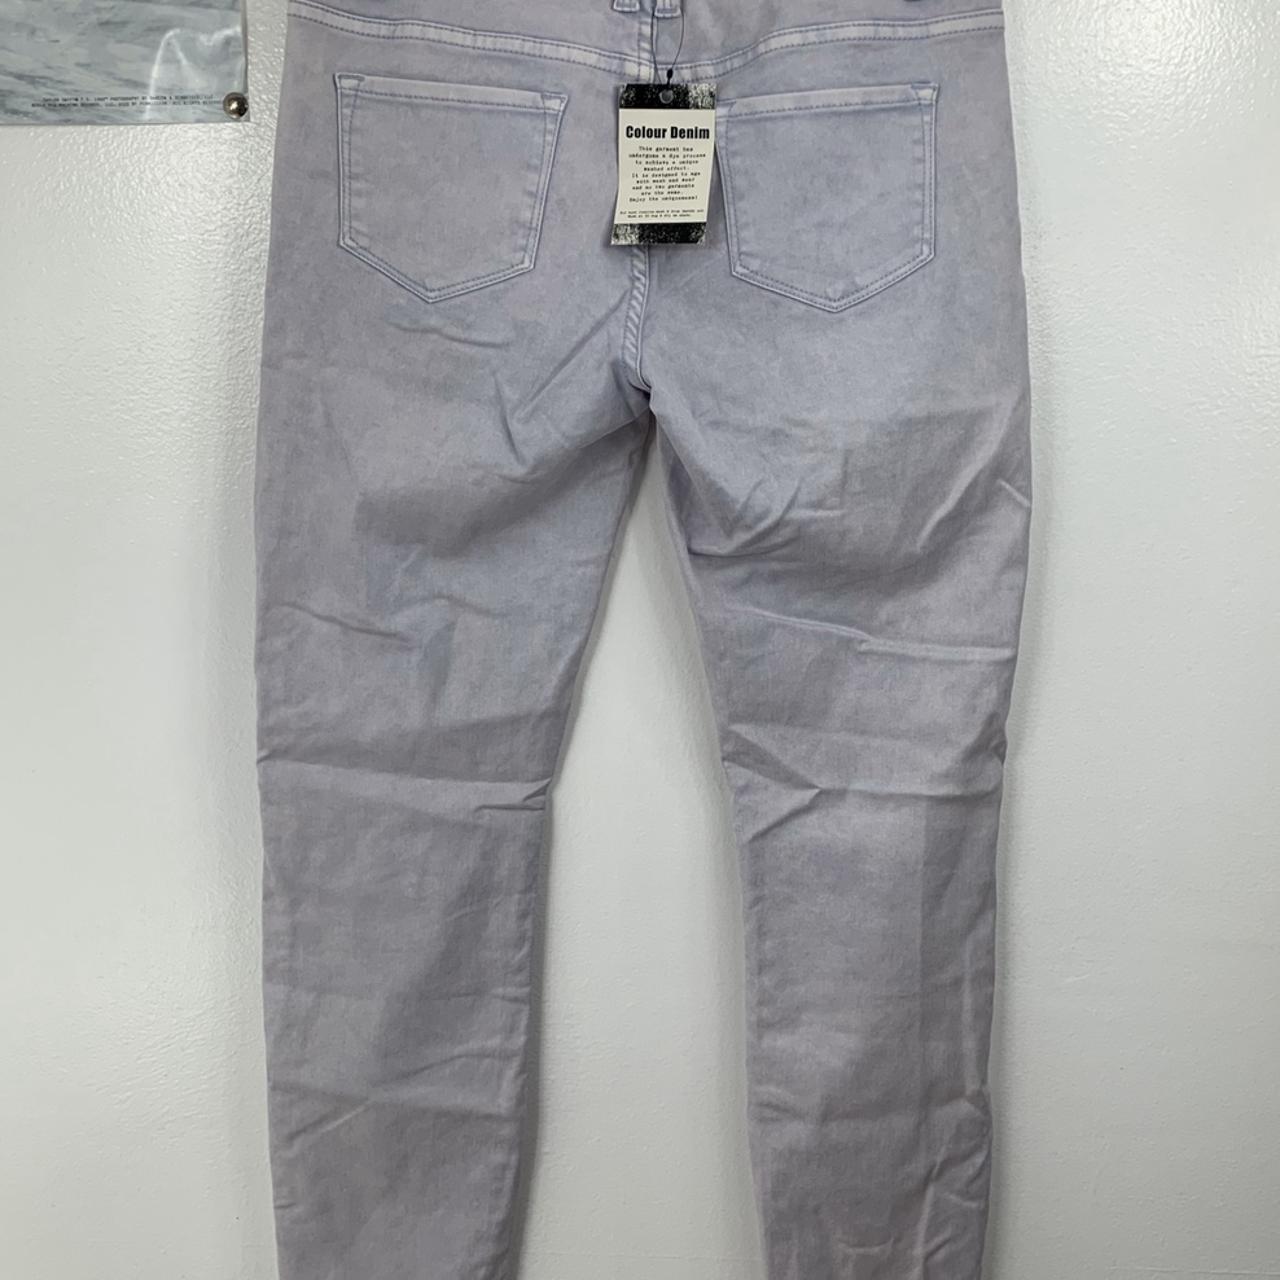 Product Image 2 - Light purple skinny pants. New